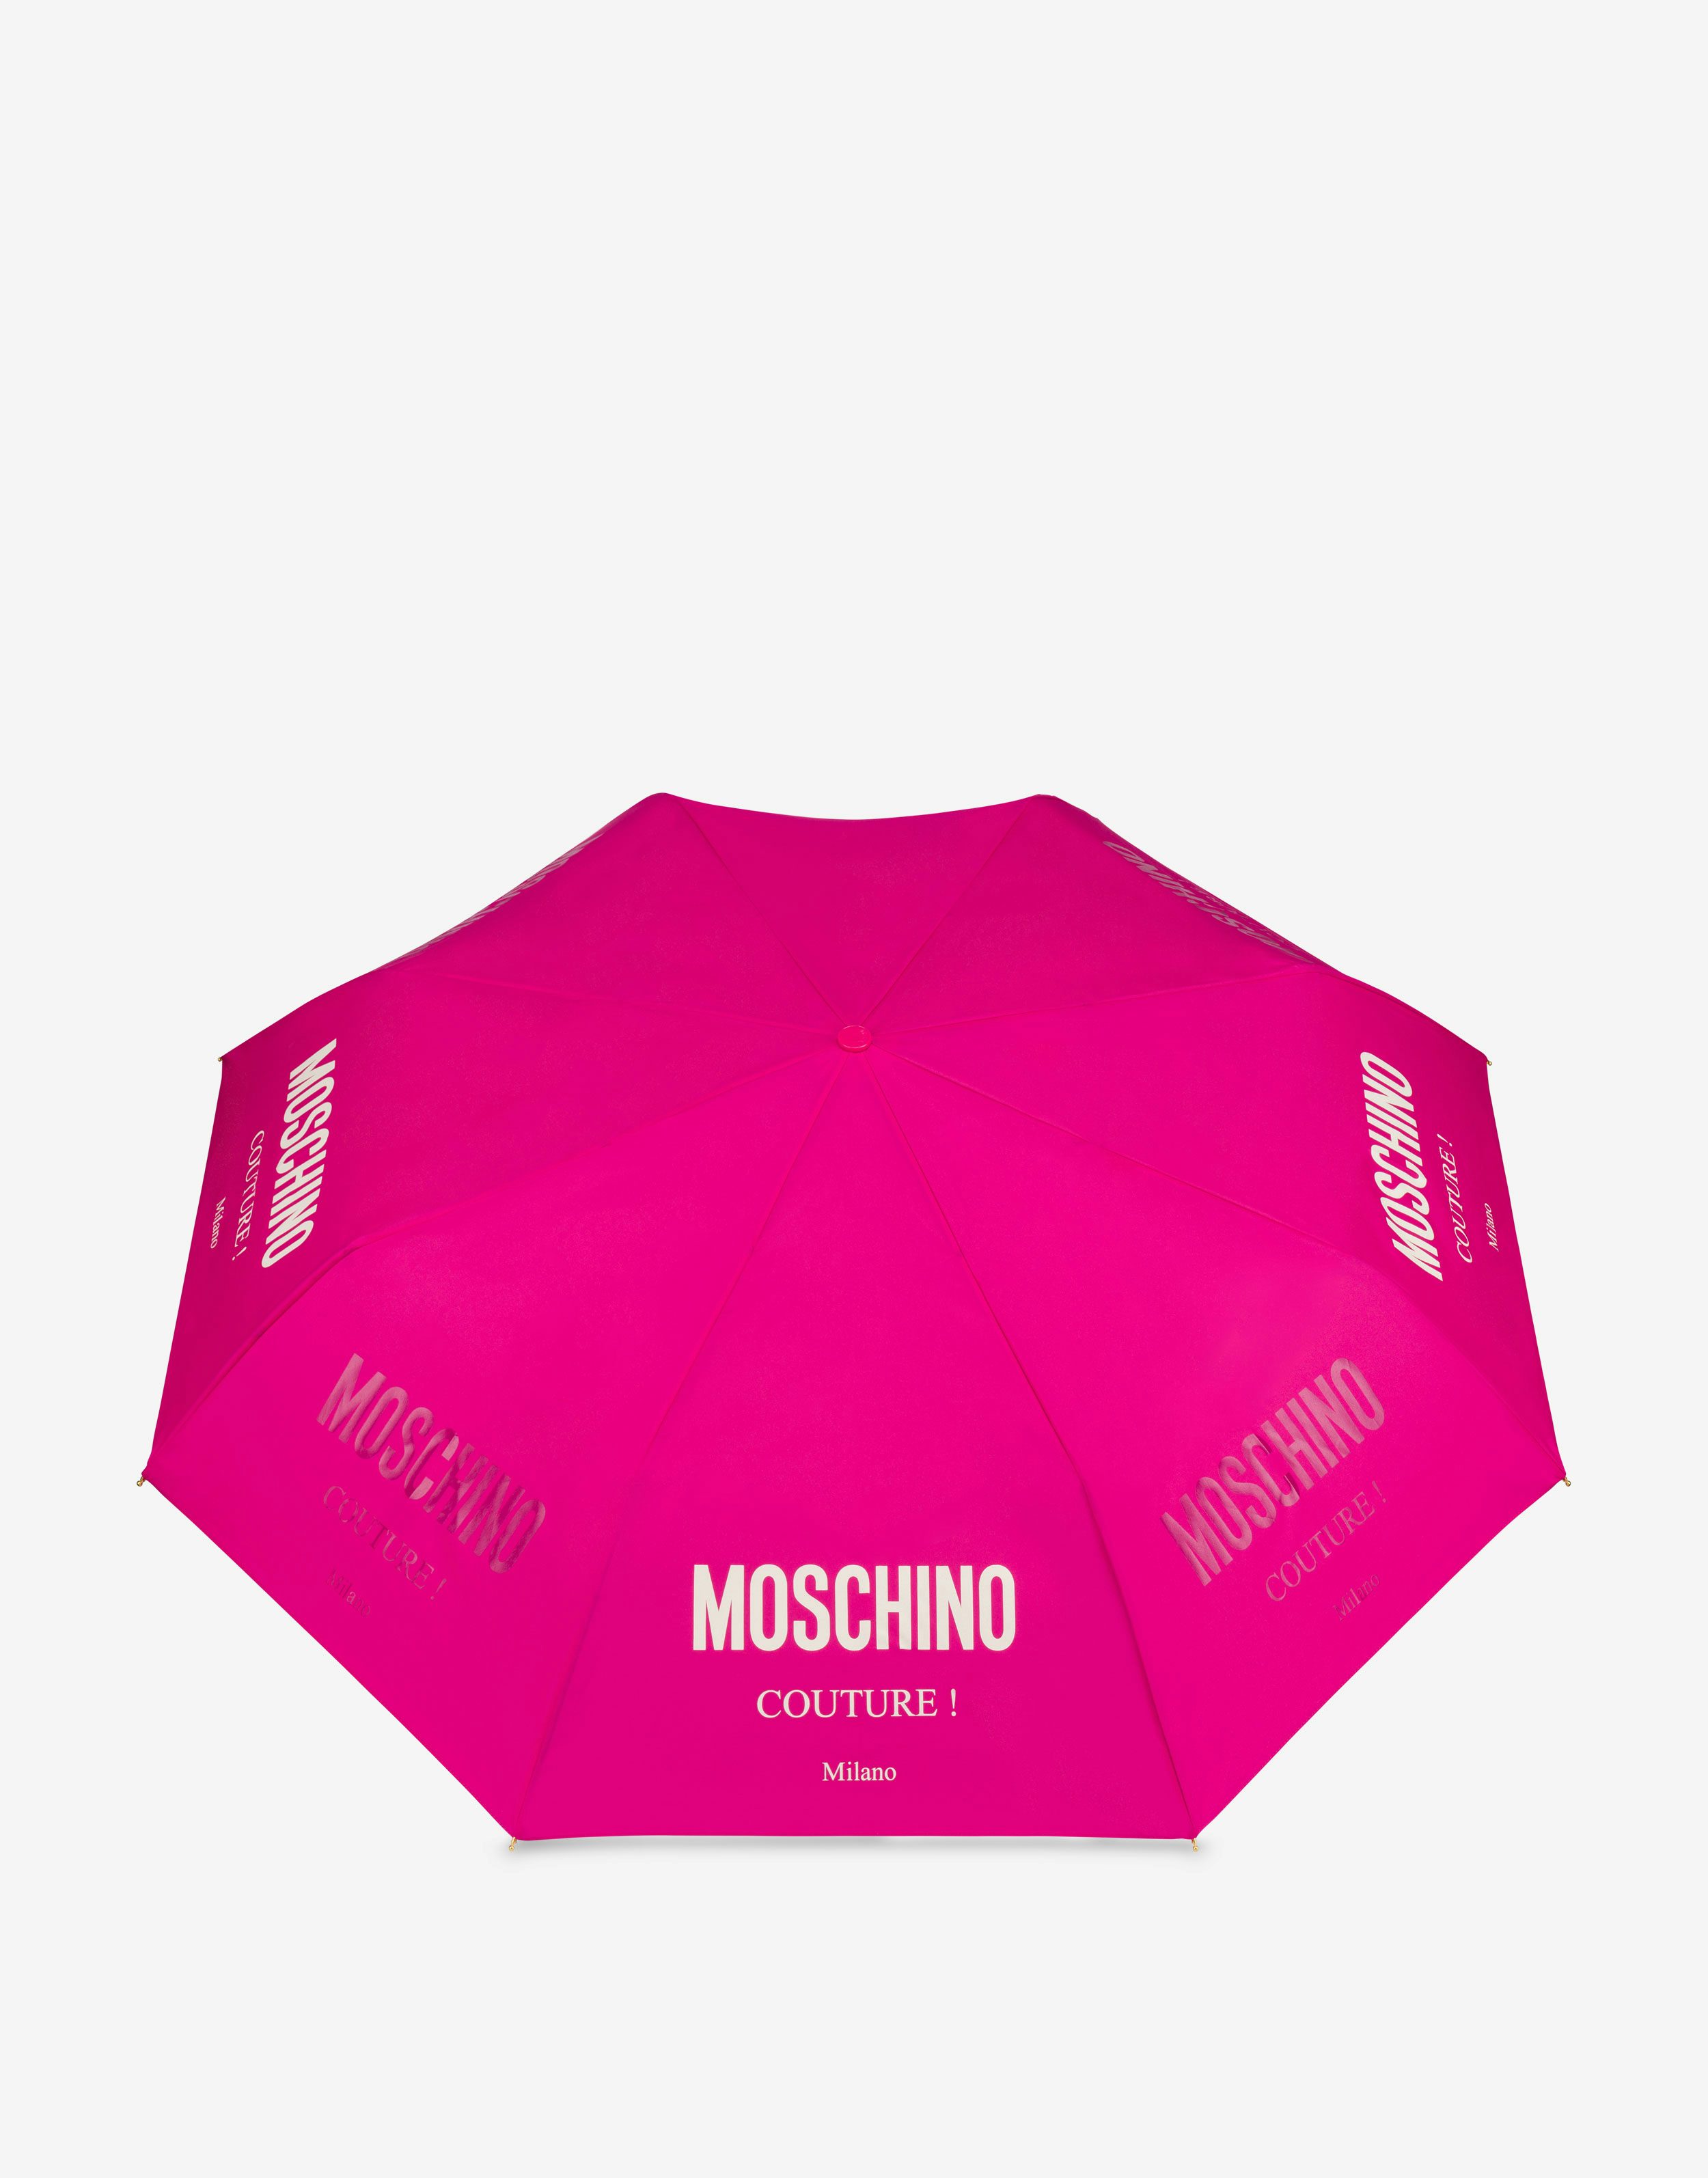 Moschino Couture open & close umbrella